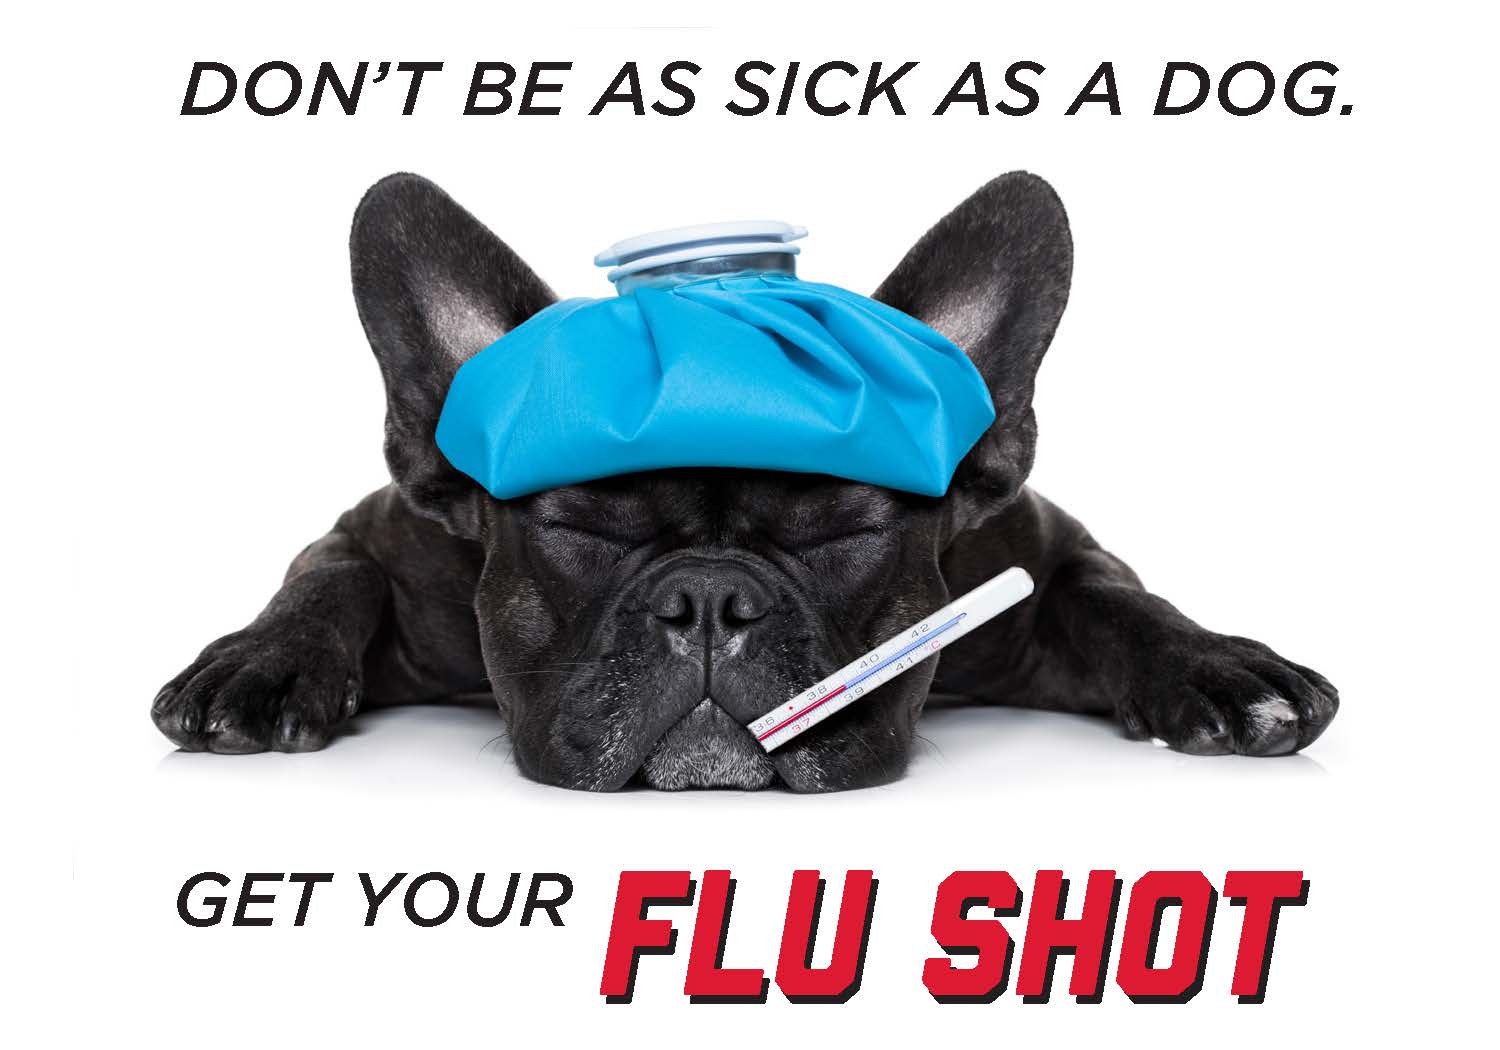 Free flu shots available at University Health Center Announce University of NebraskaLincoln